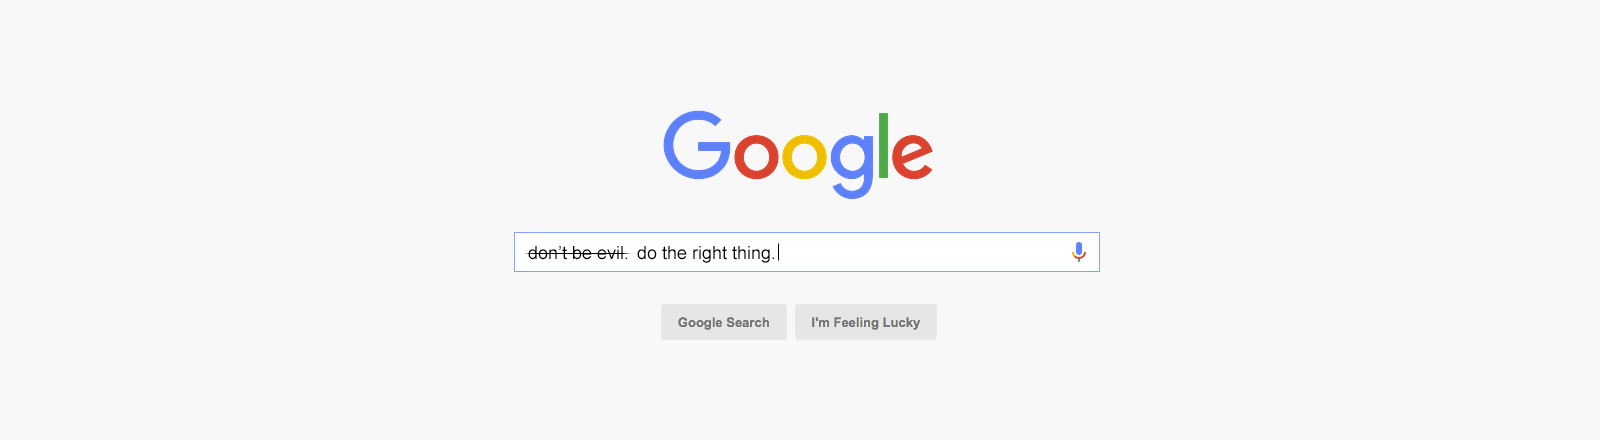 Ok google маленькие. Гуглить. Google do the right thing.